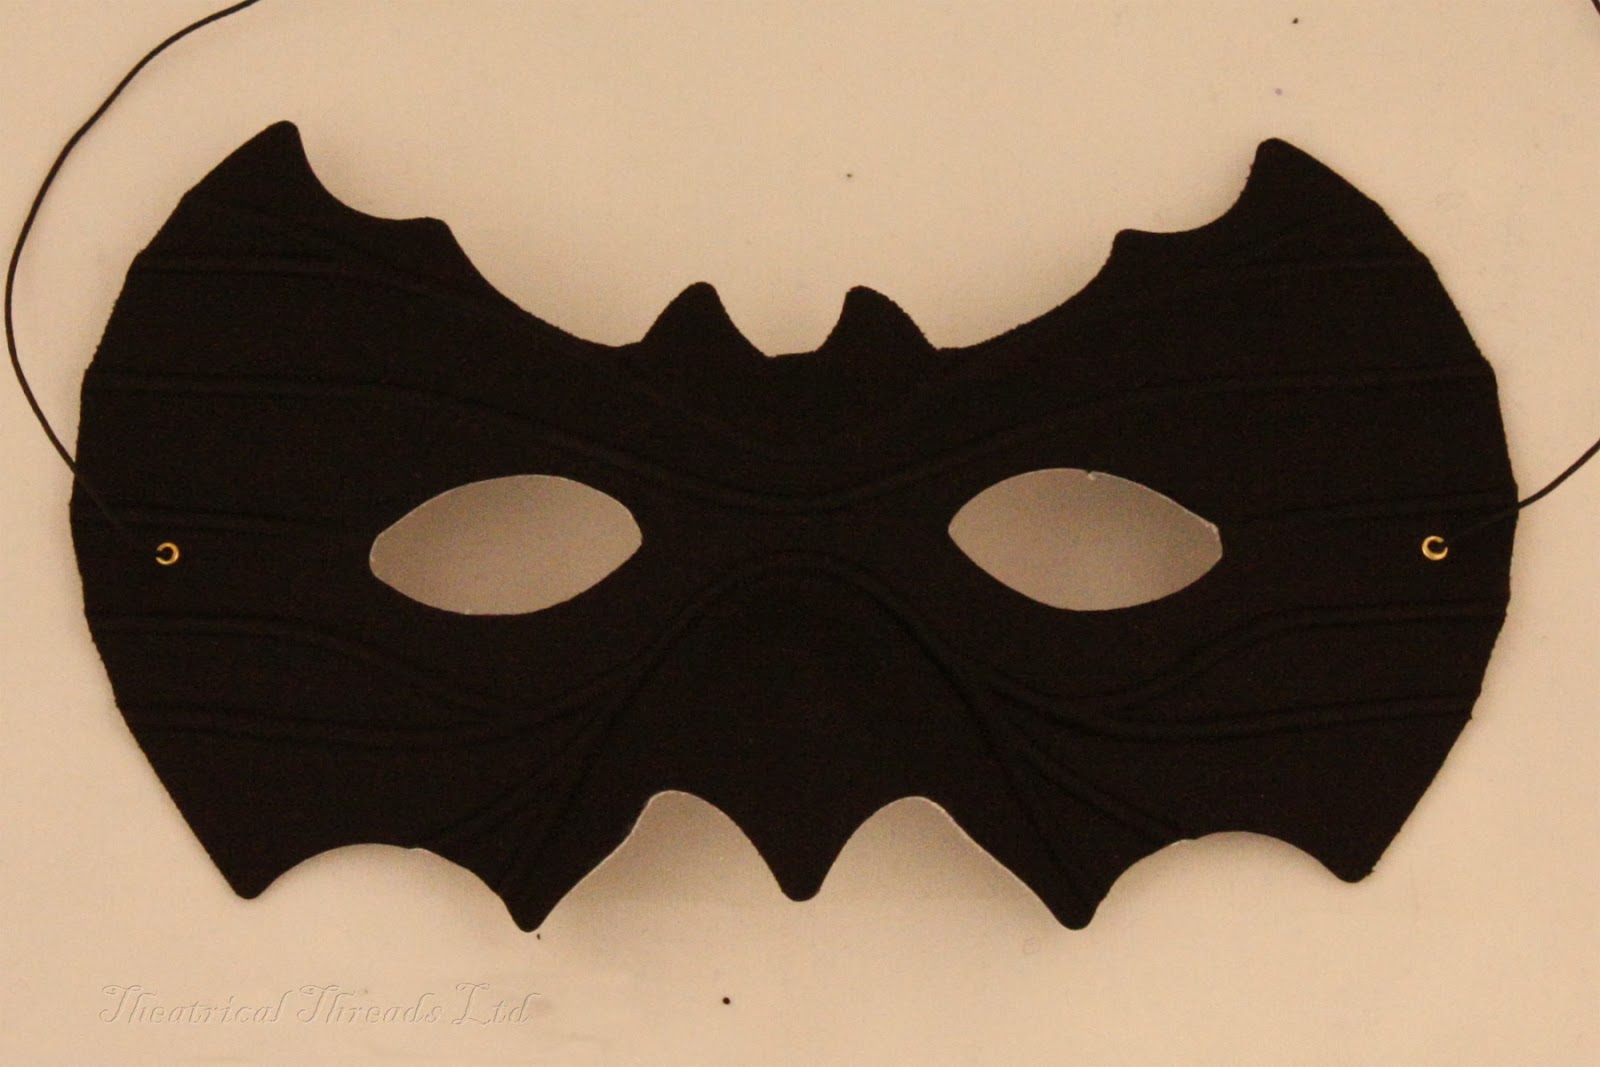 Theatrical Threads: Halloween Bat Masks